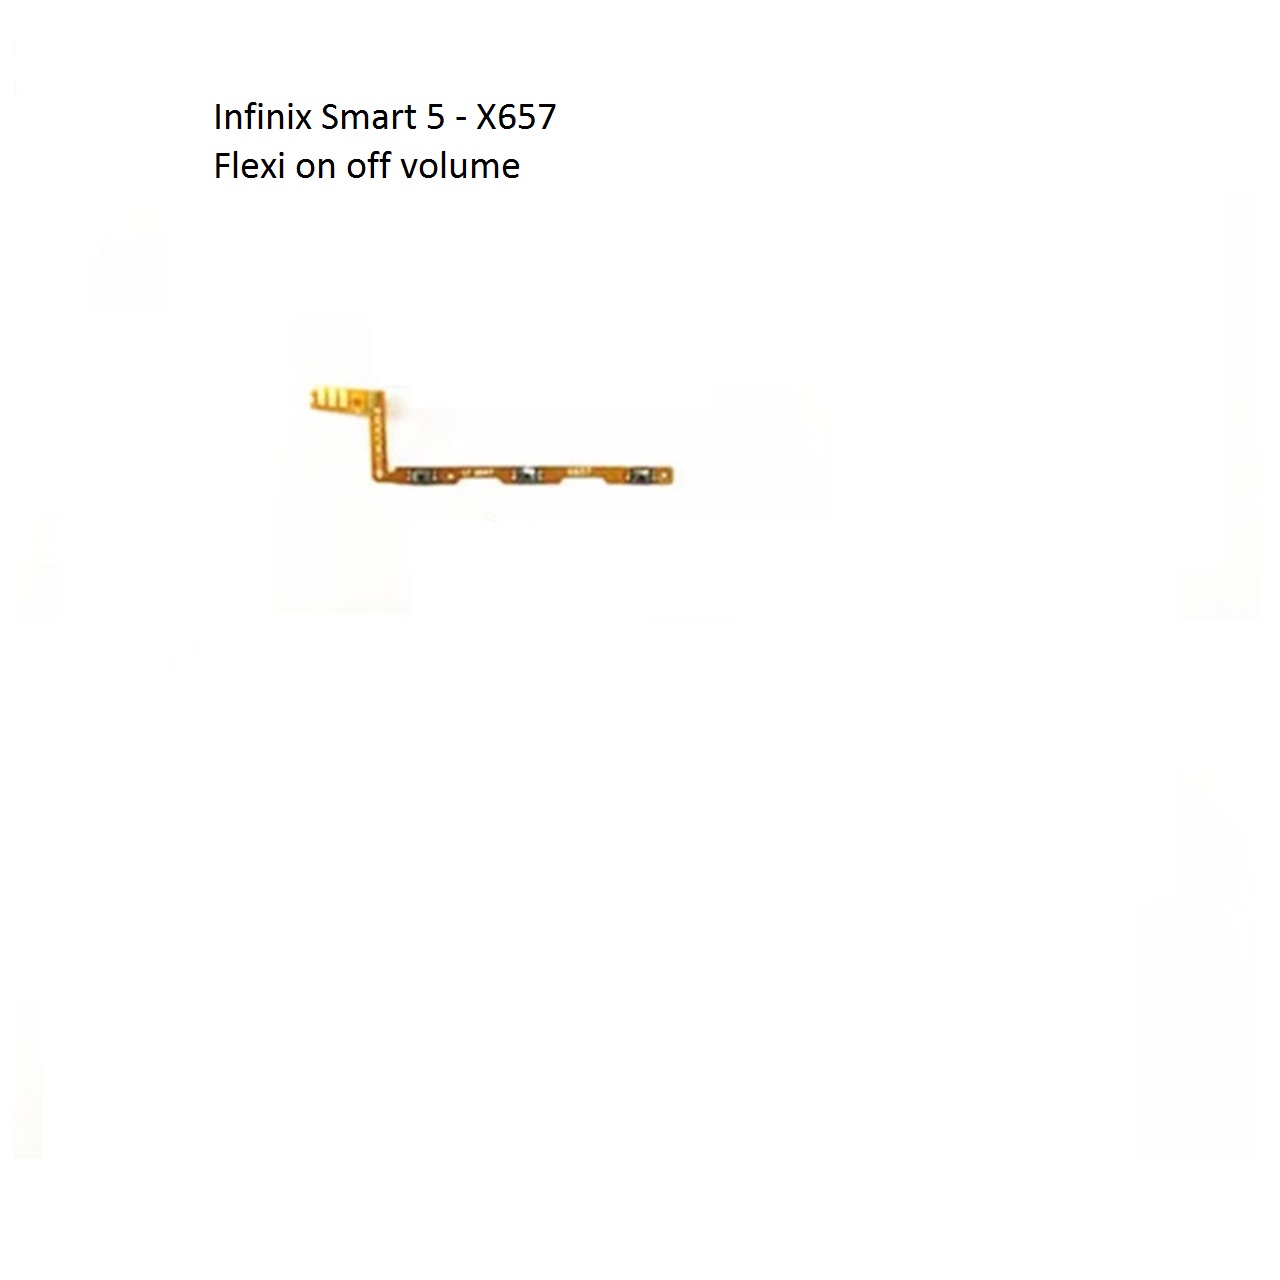 FLEXI-ON-OFF-VOLUME-INFINIX-X657-INFINIX-SMART-5